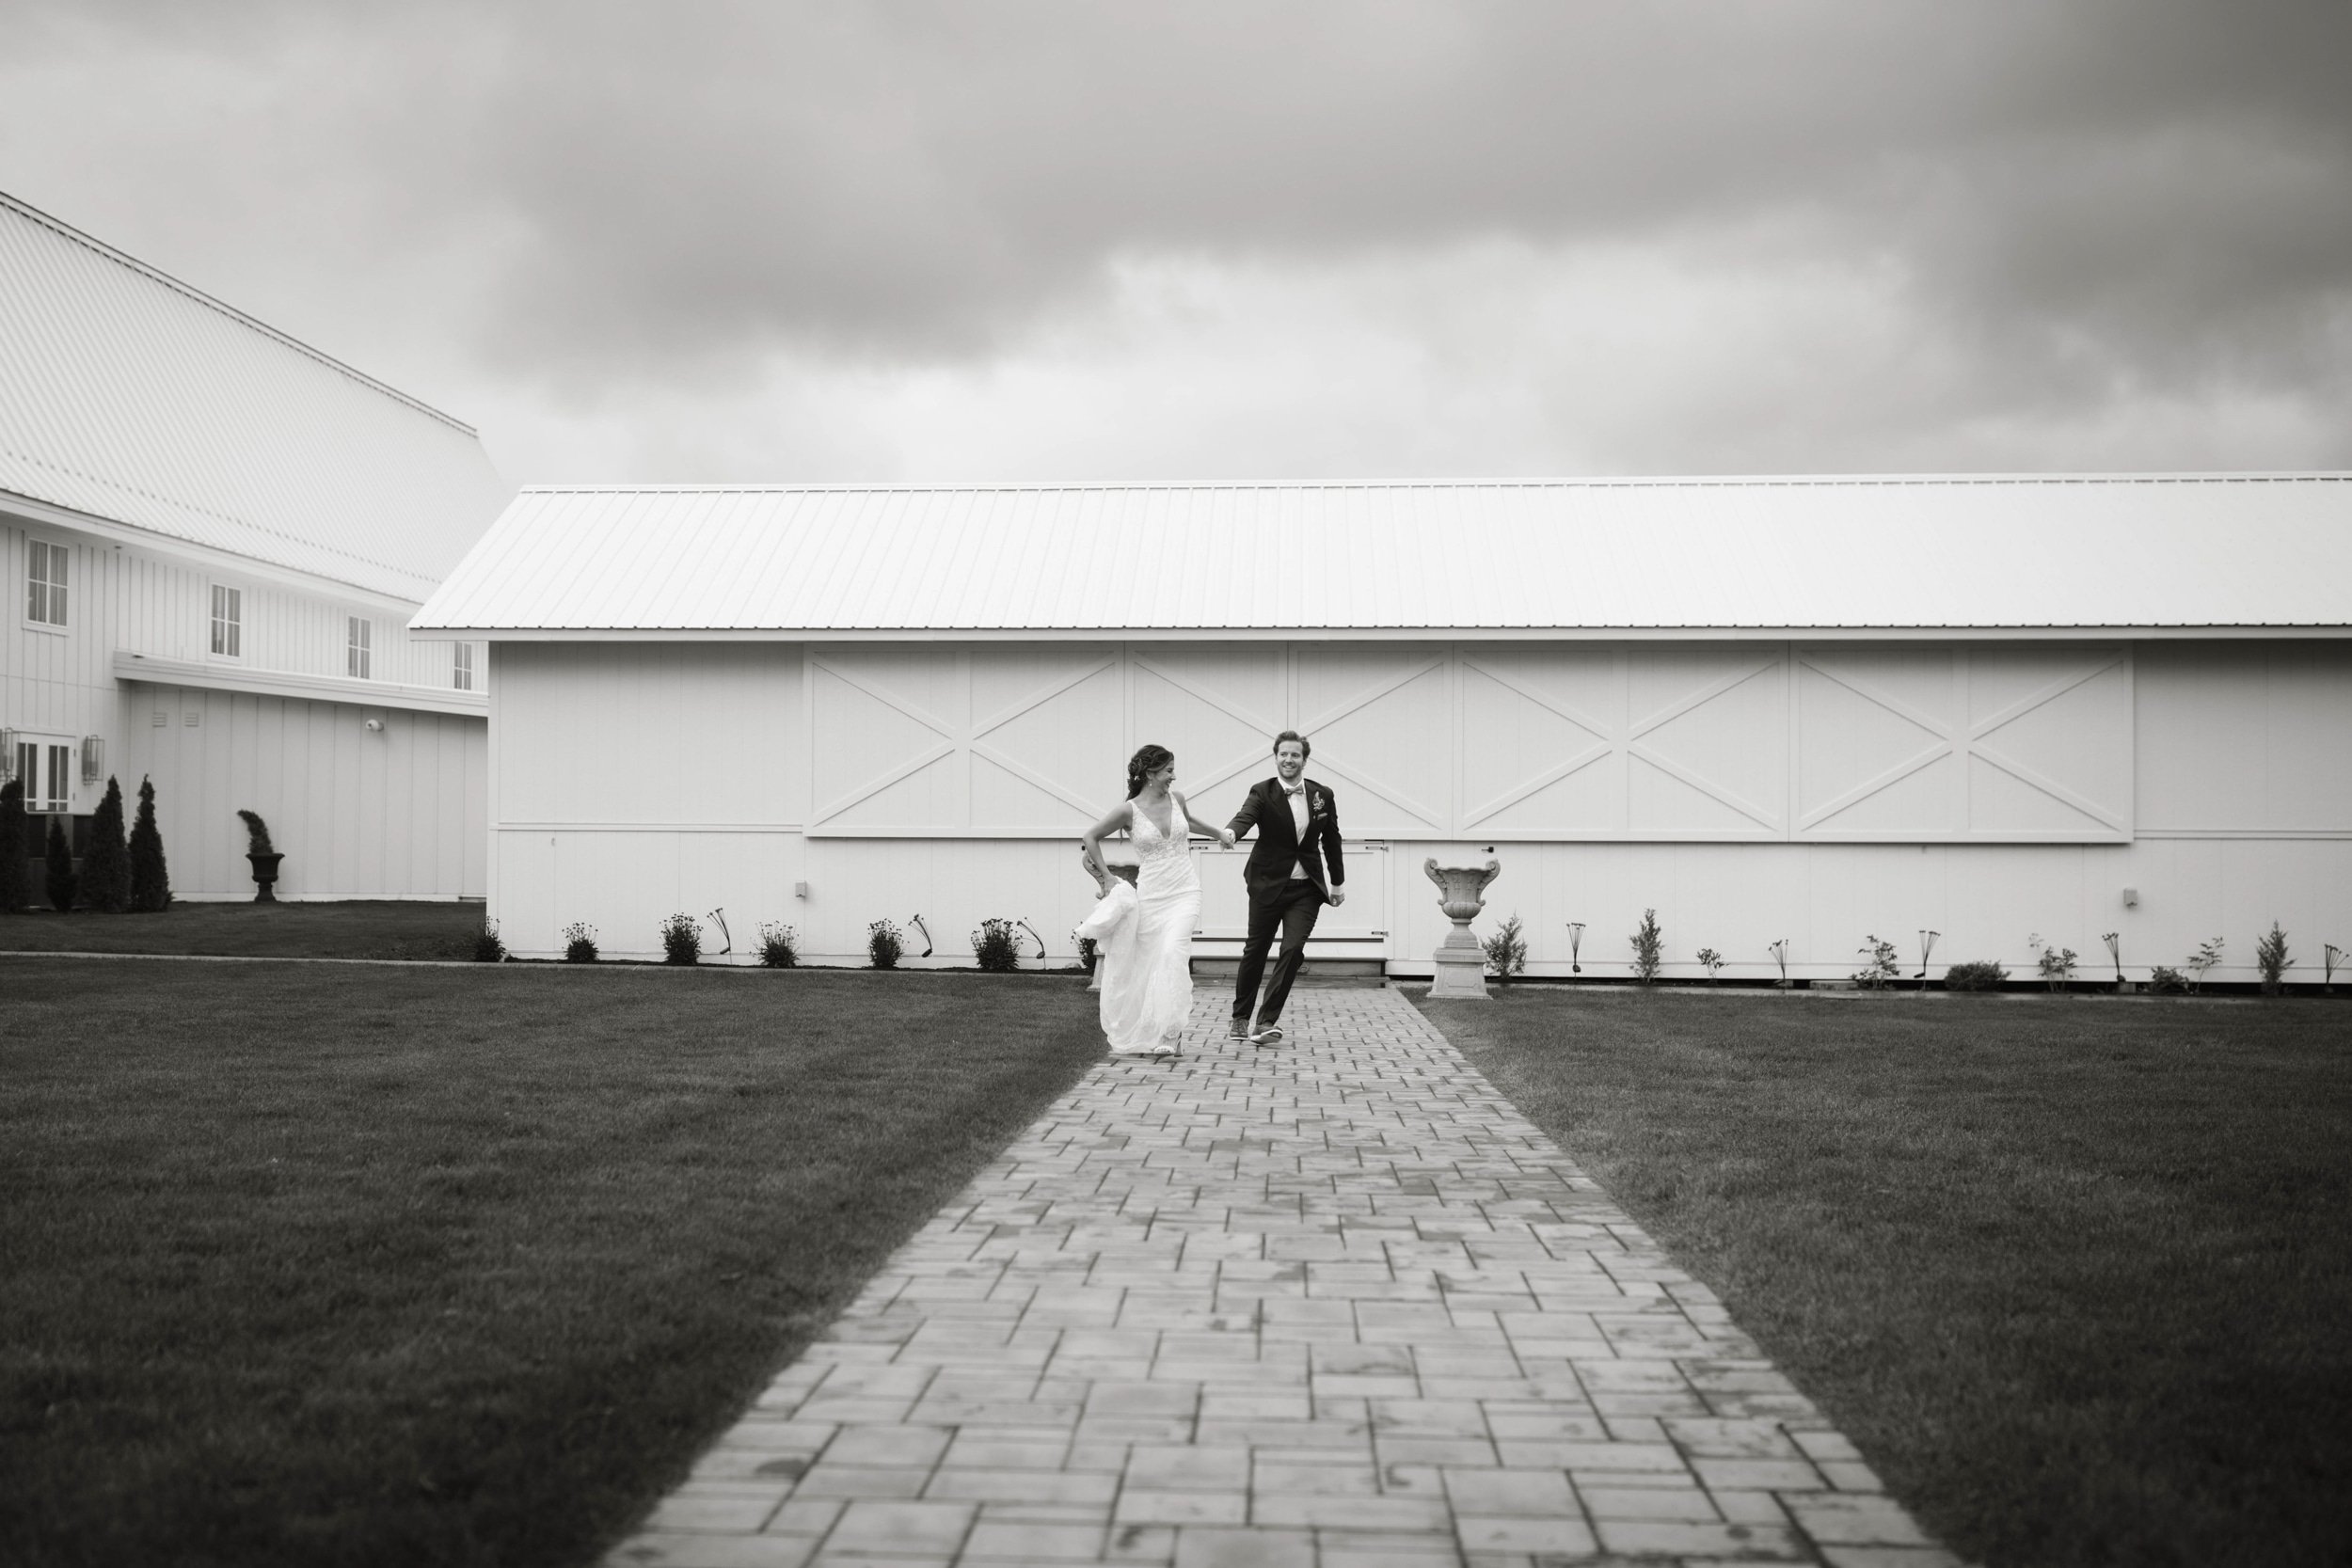 Etre farms Michigan wedding venue saint joseph st luxury barn all inclusive photography photographer -41.jpg